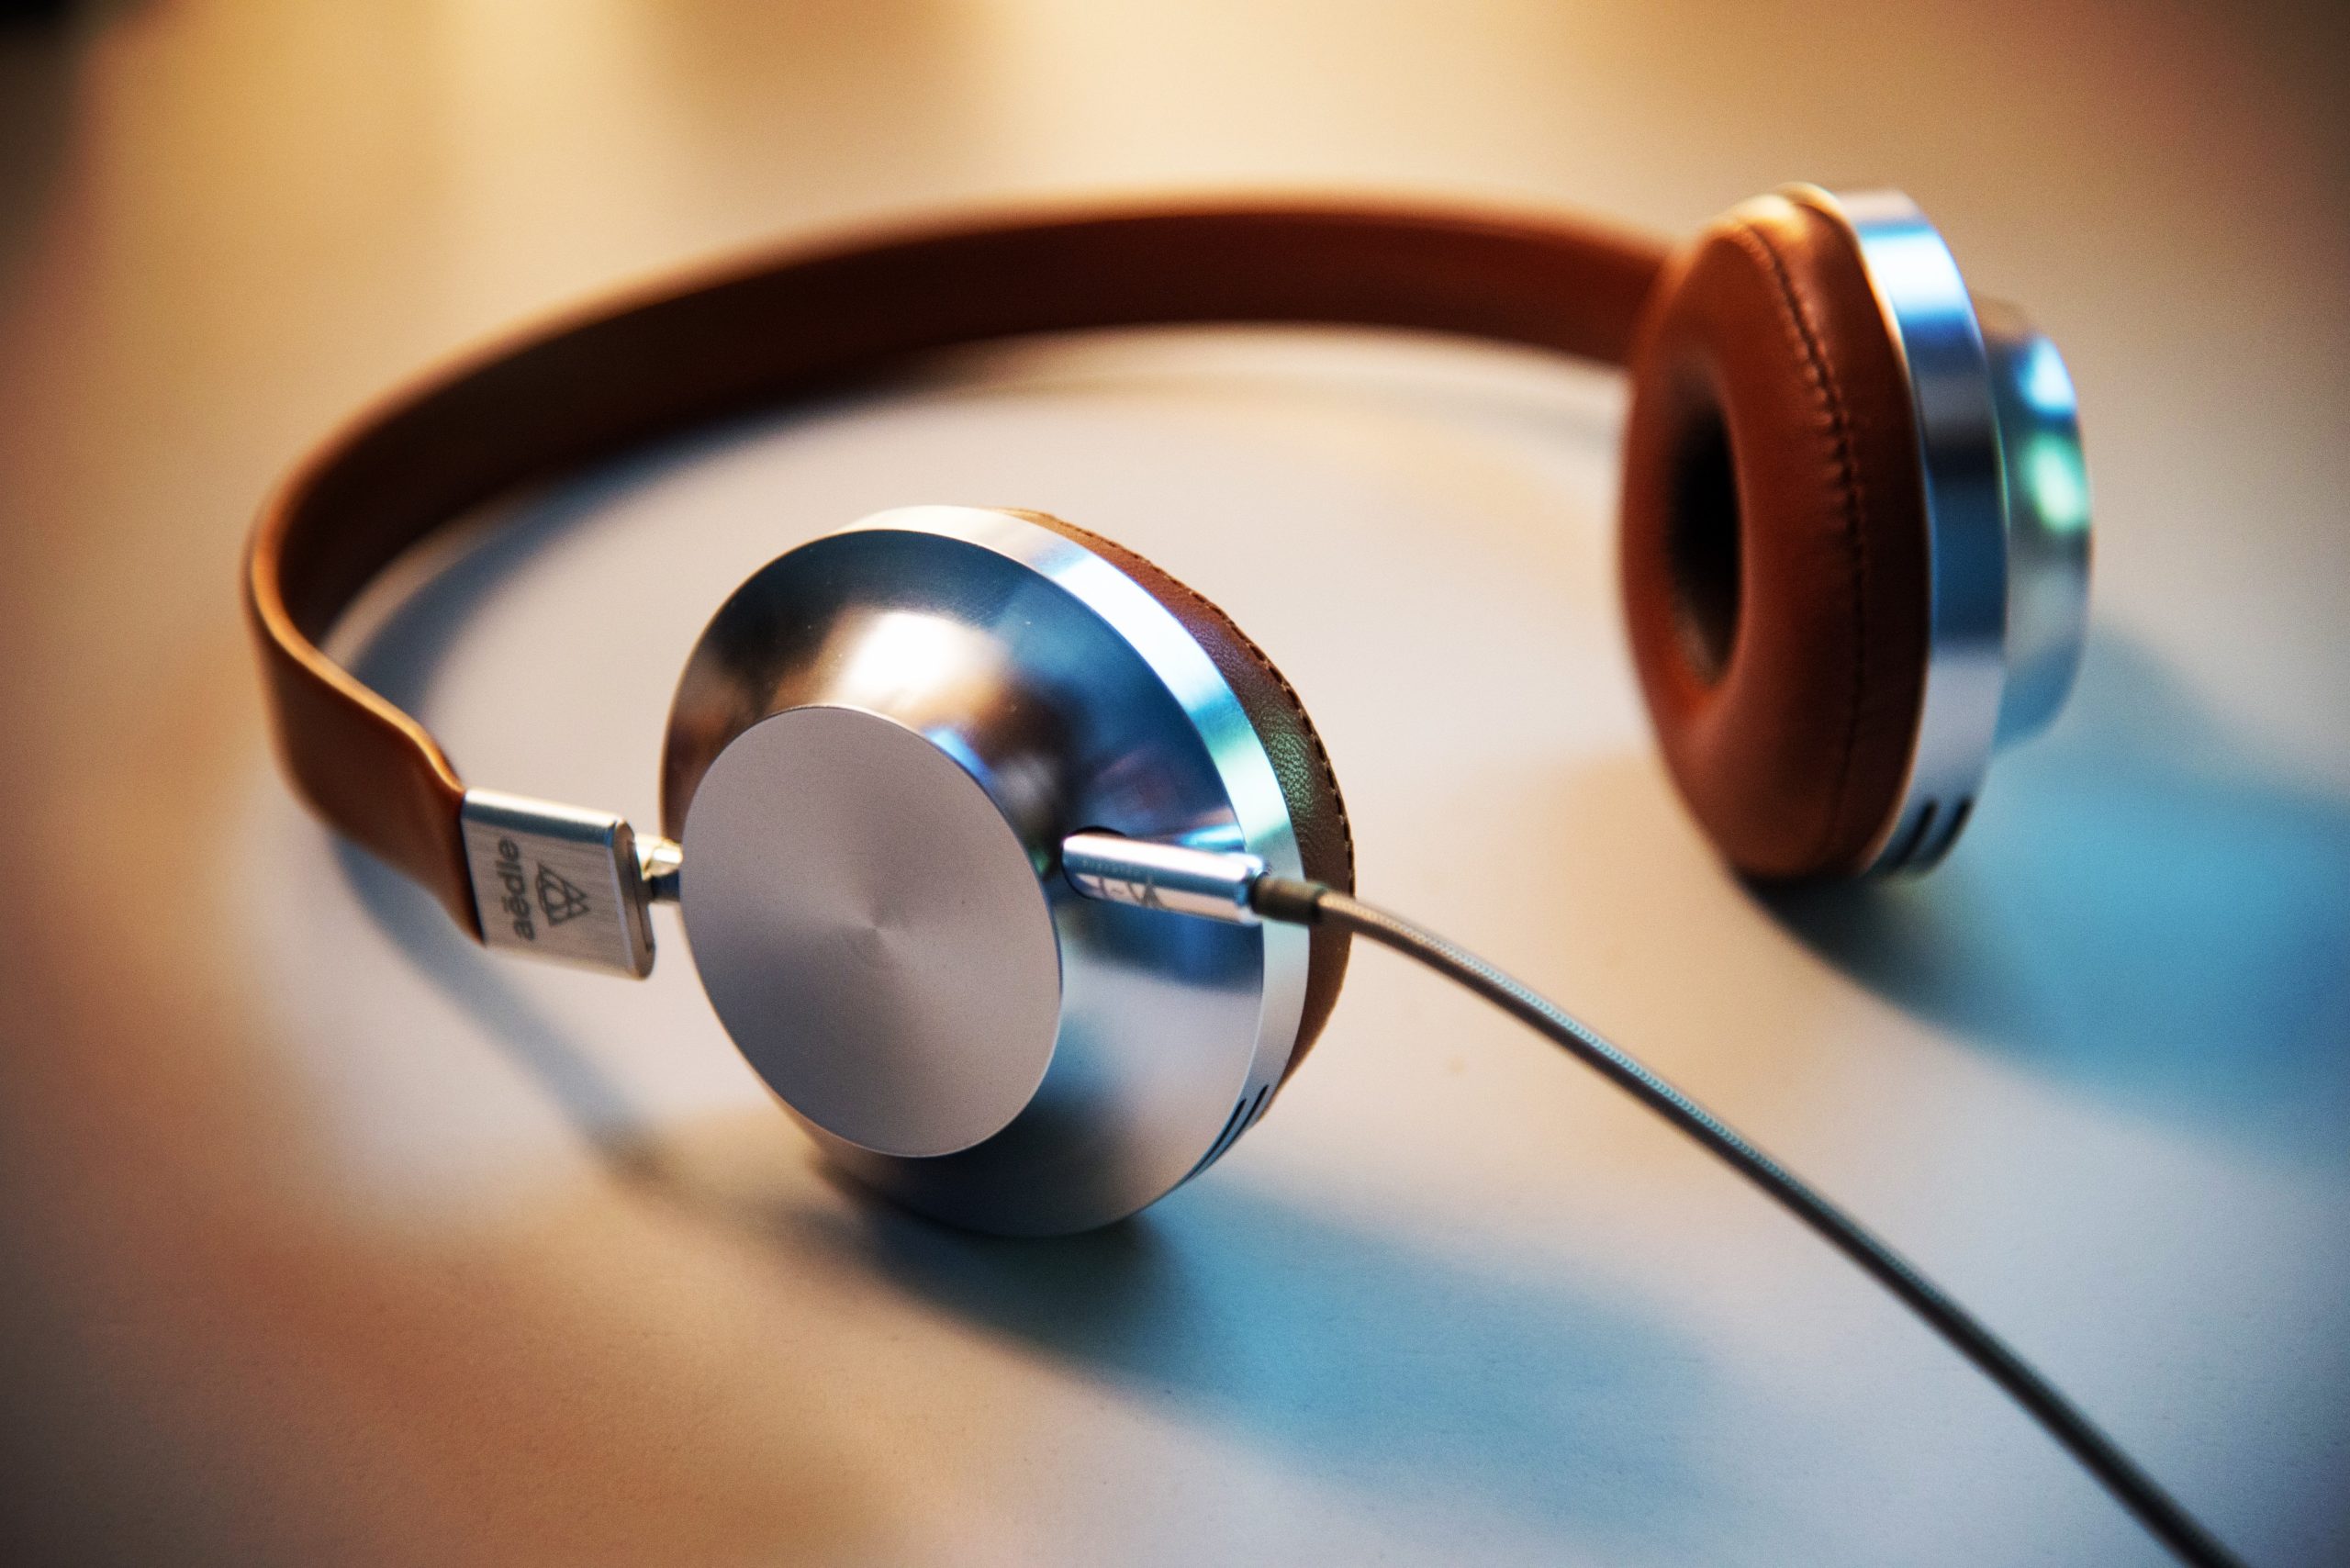 Image of headphones on a desk.